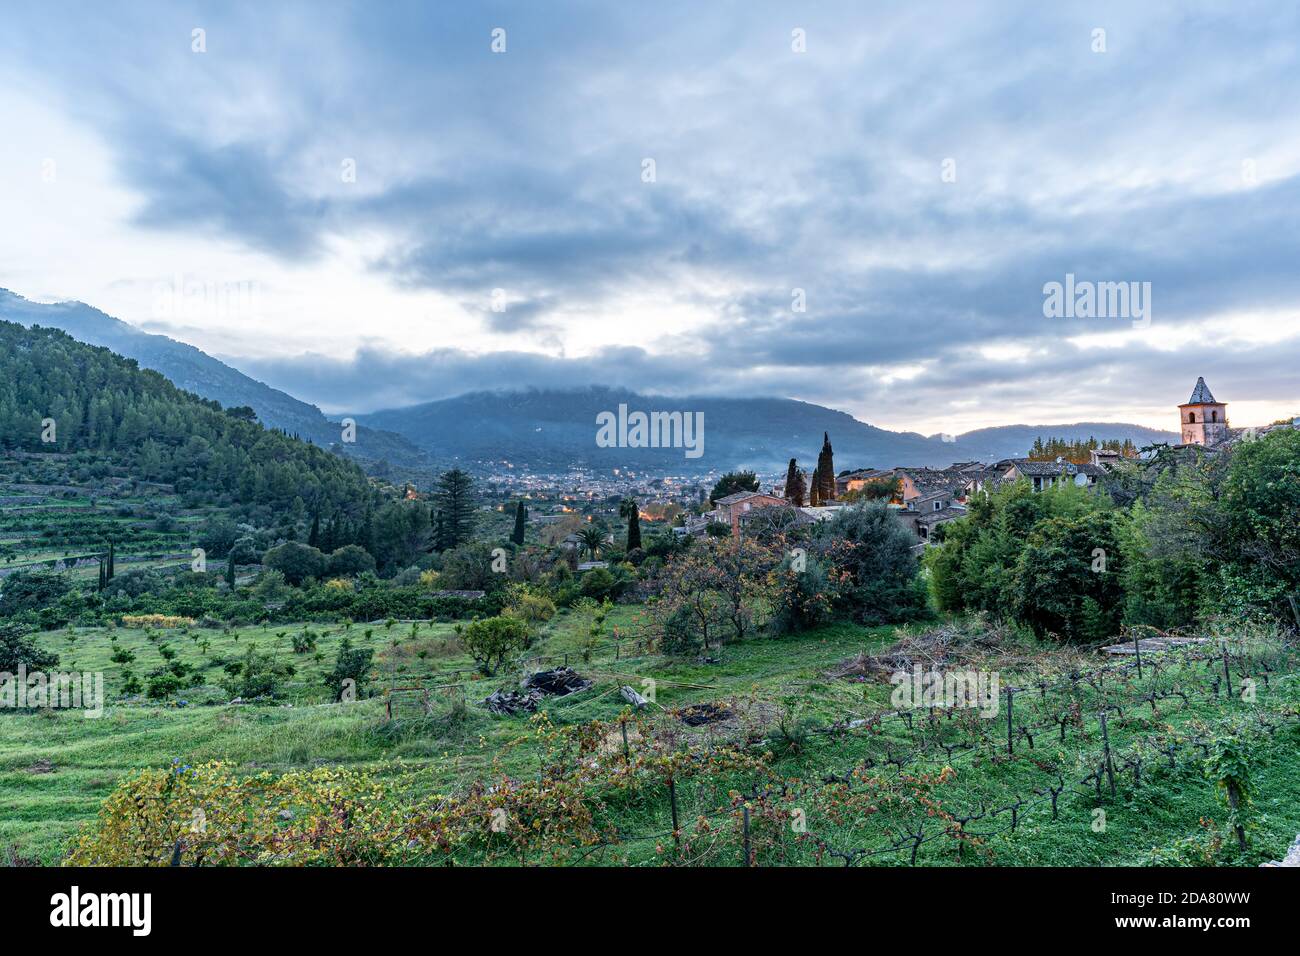 Splendida vista sulla città di Sóller, nella Serra de Tramuntana, Maiorca, Spagna. Foto Stock